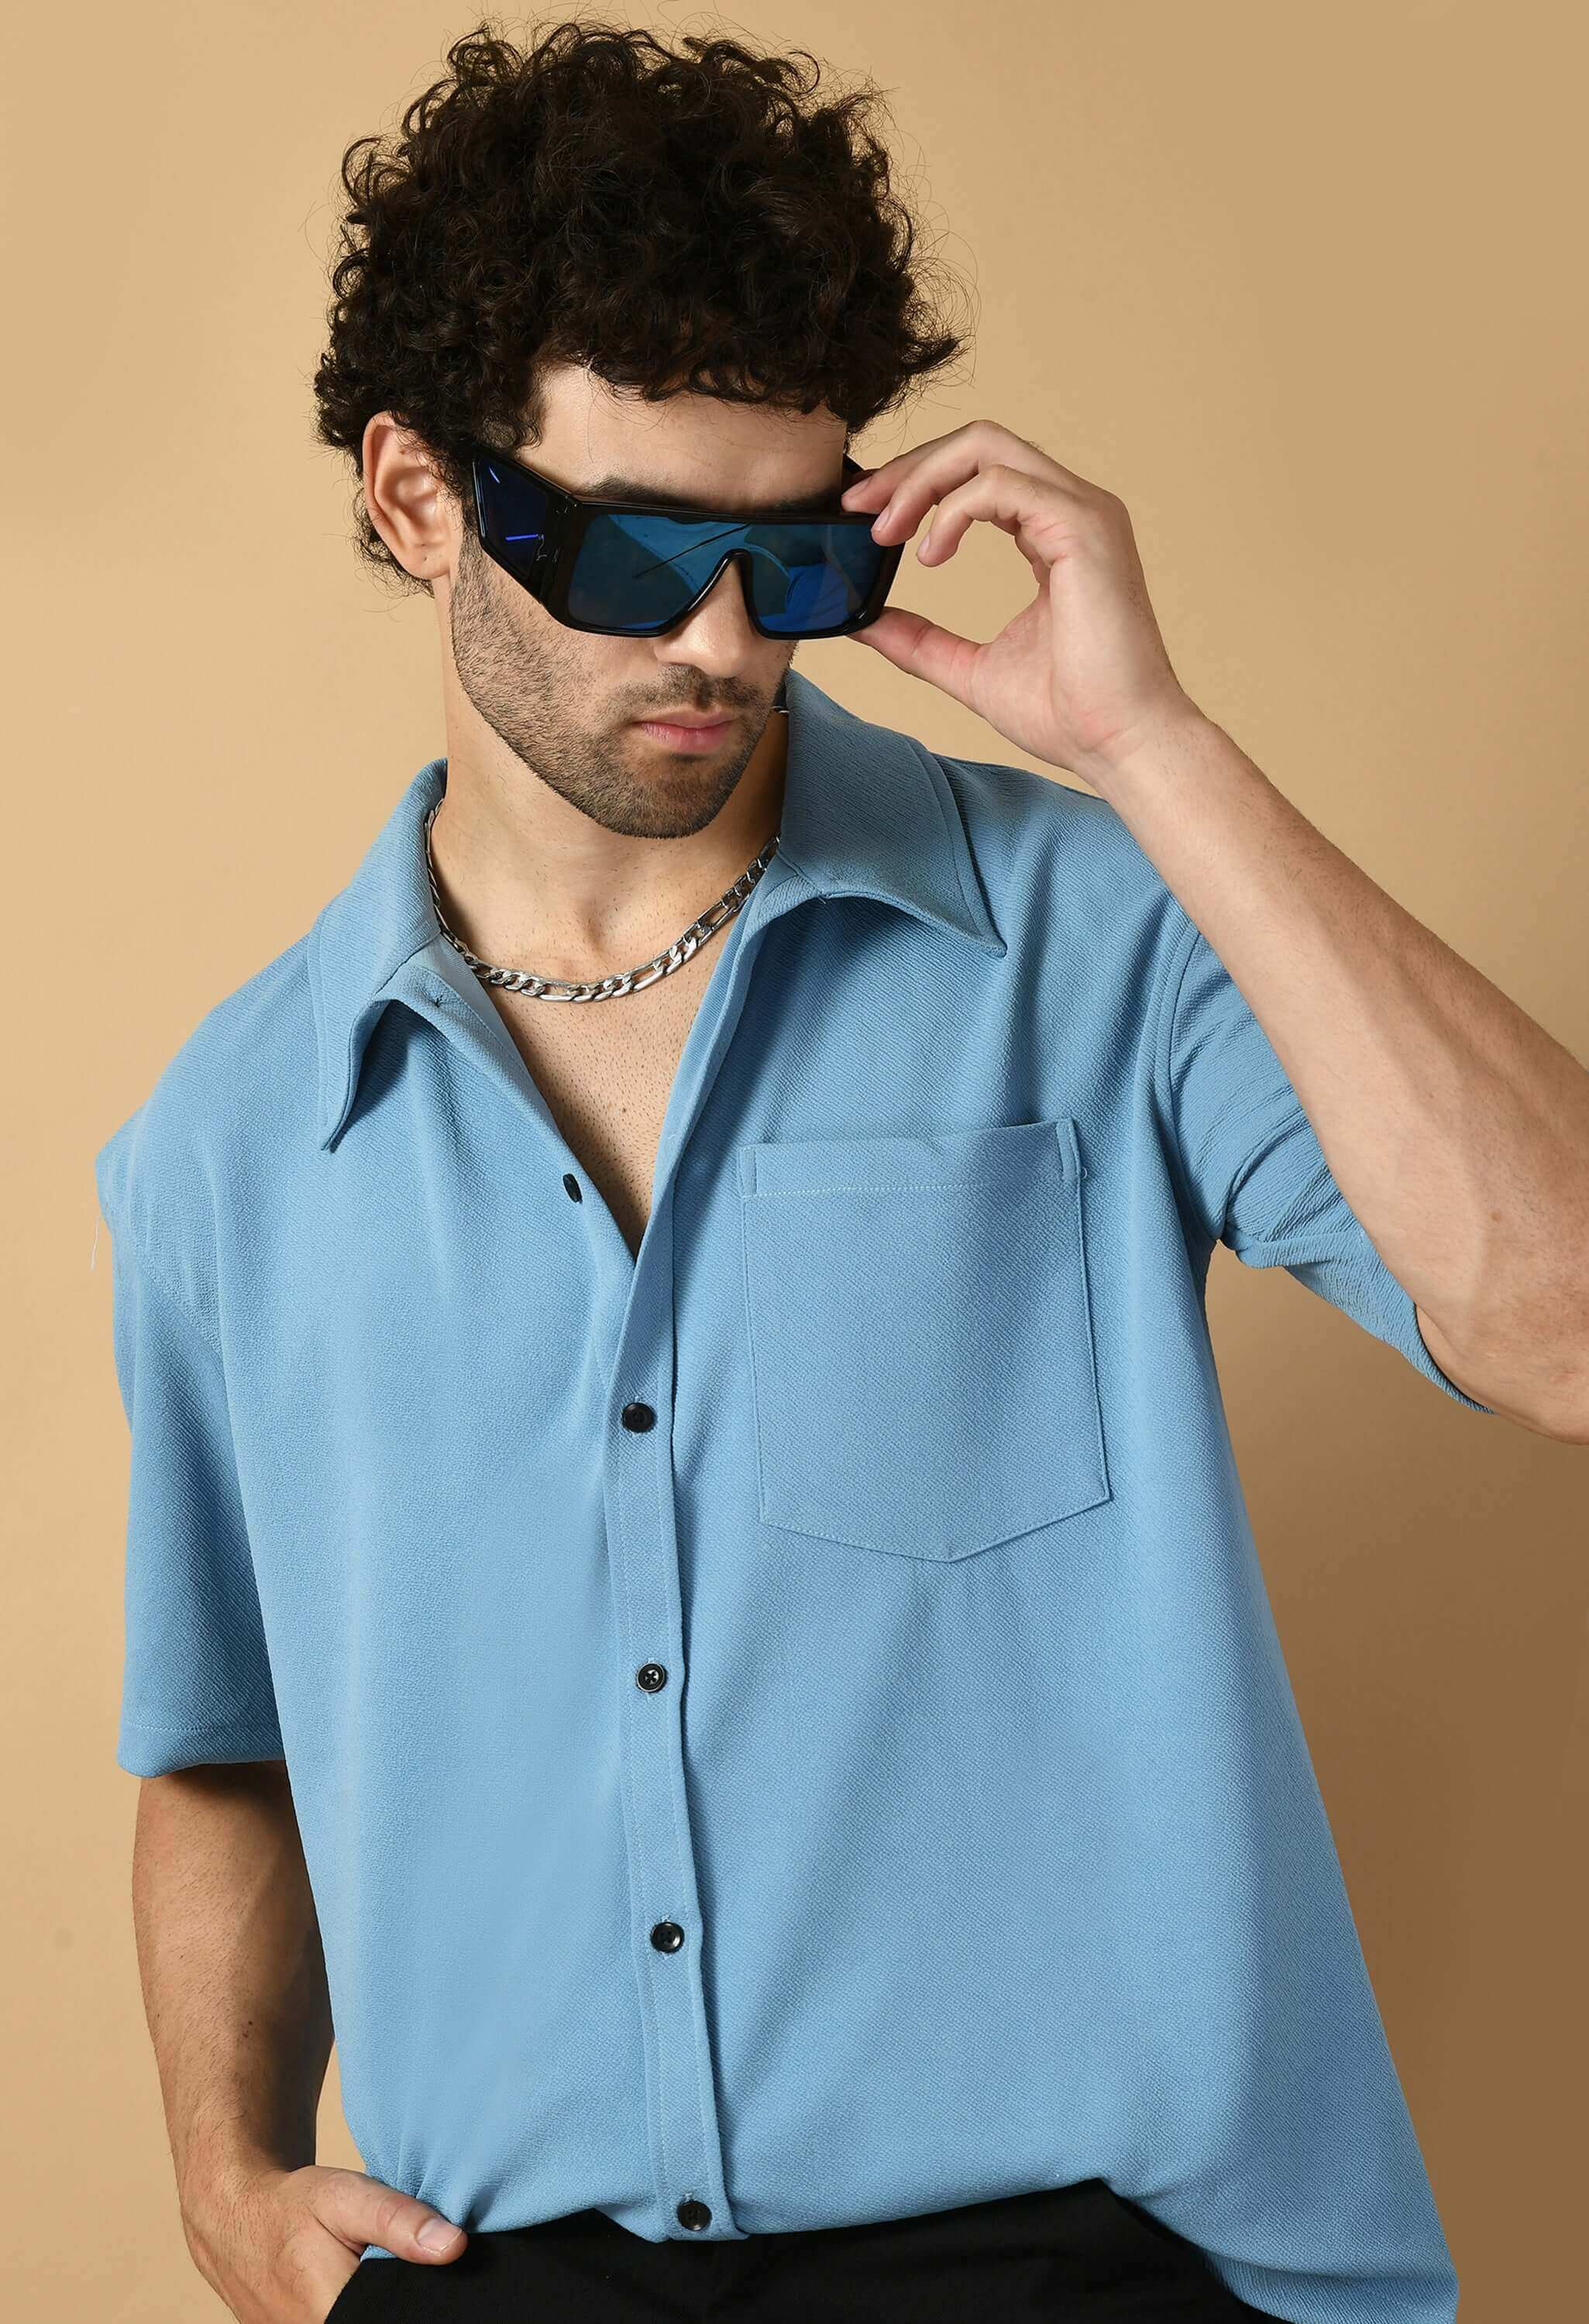 Blue color overshirt for men's